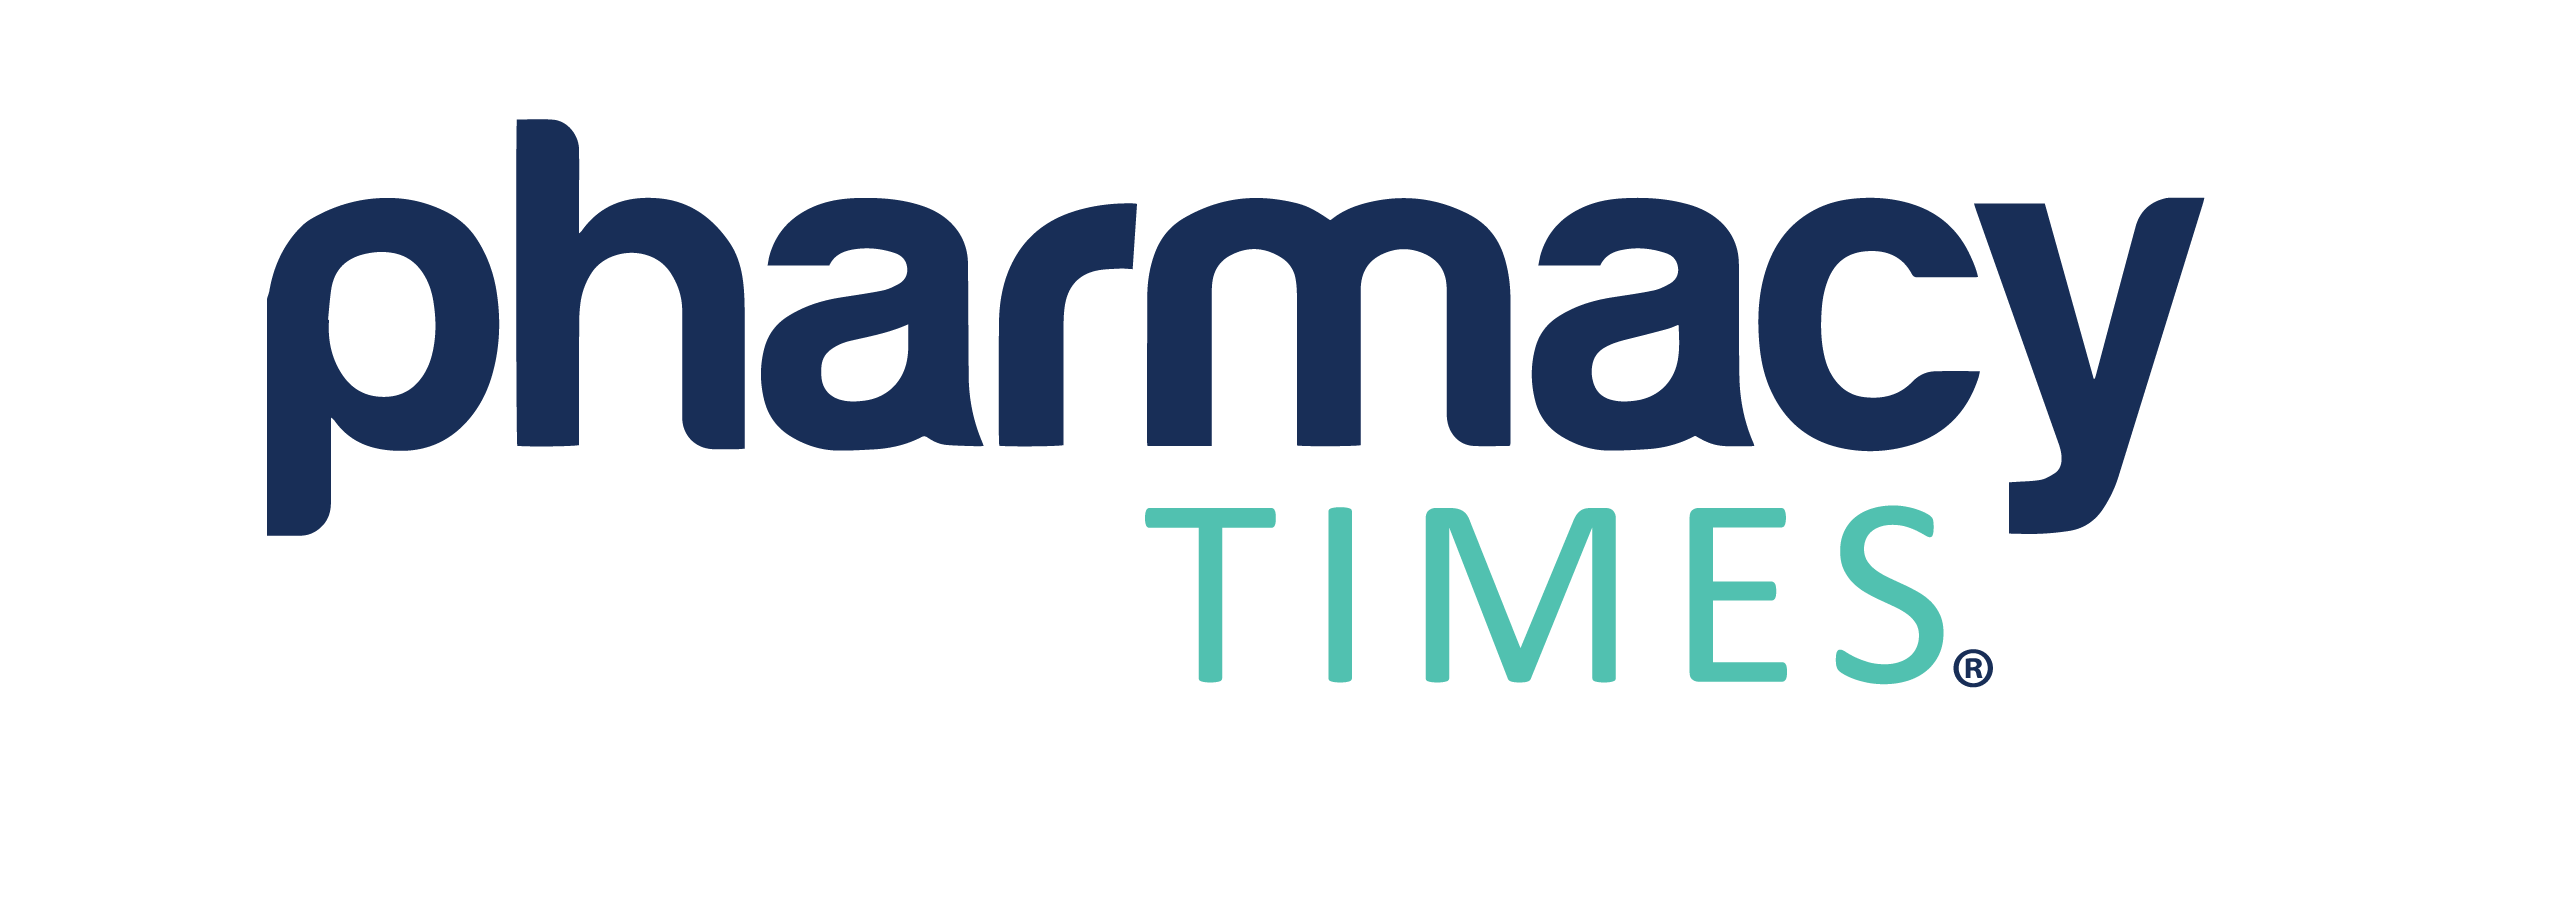 pharmacy times logo